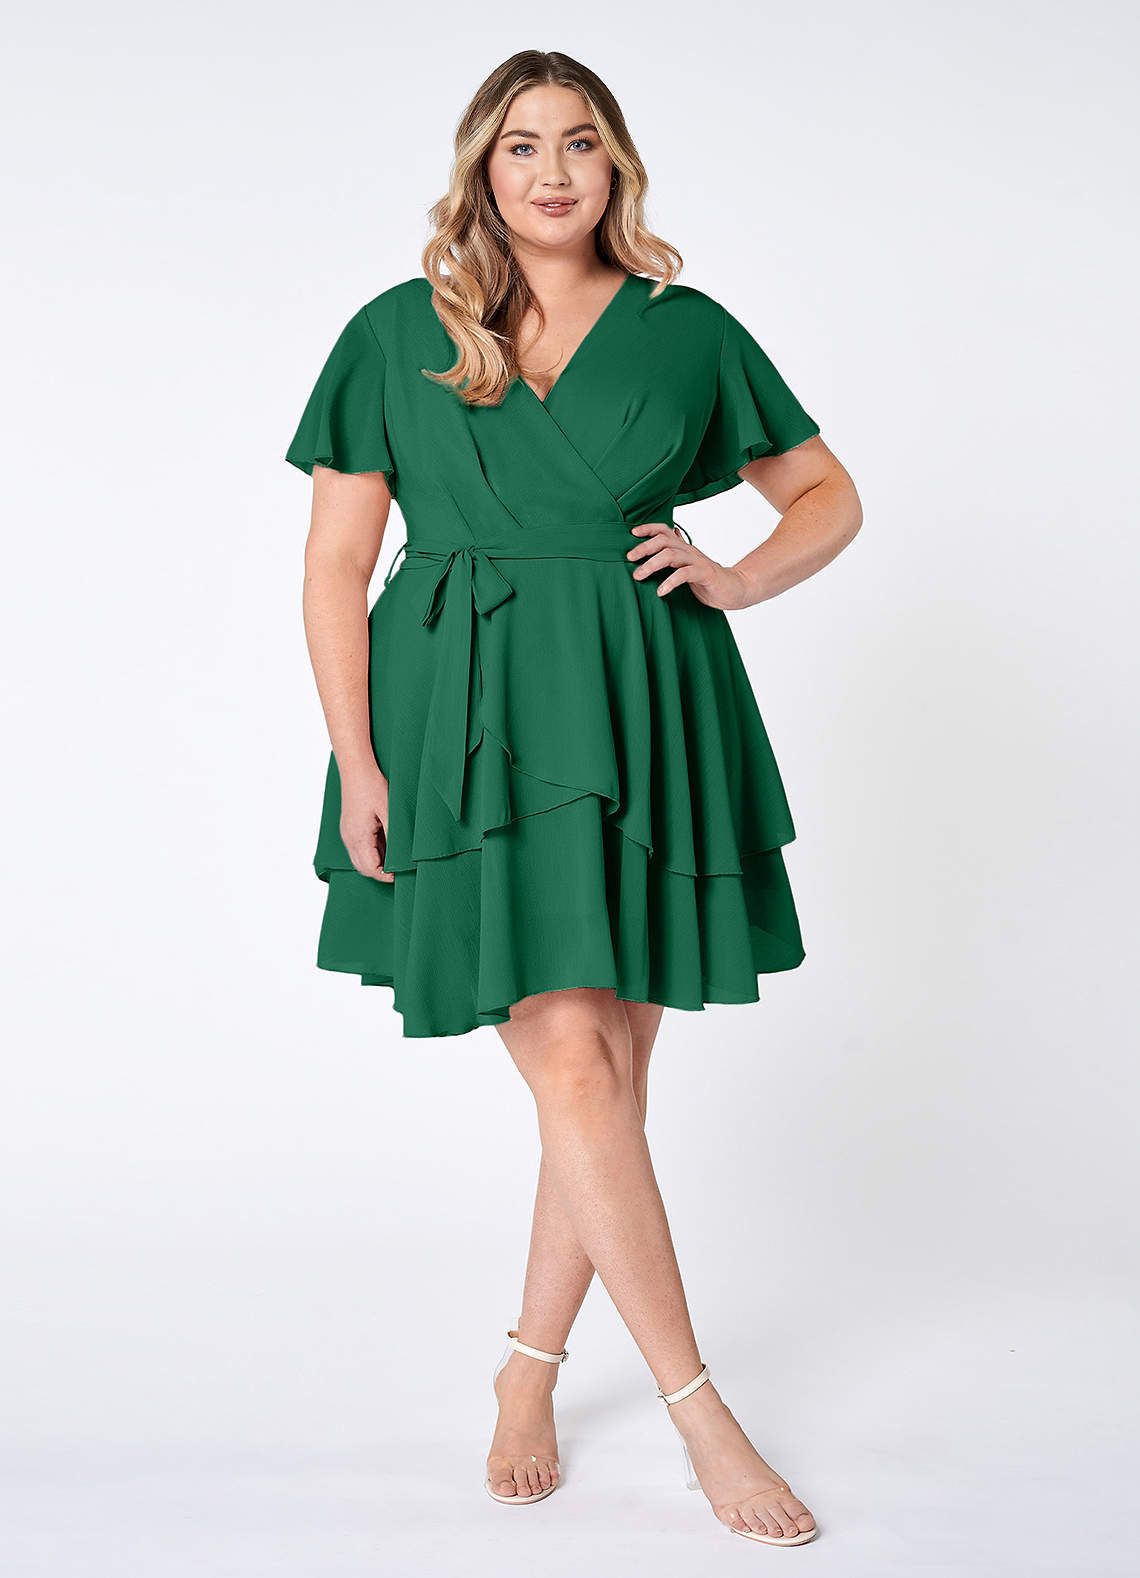 Downright Darling Dark Emerald Ruffled Short Sleeve Mini Dress image1